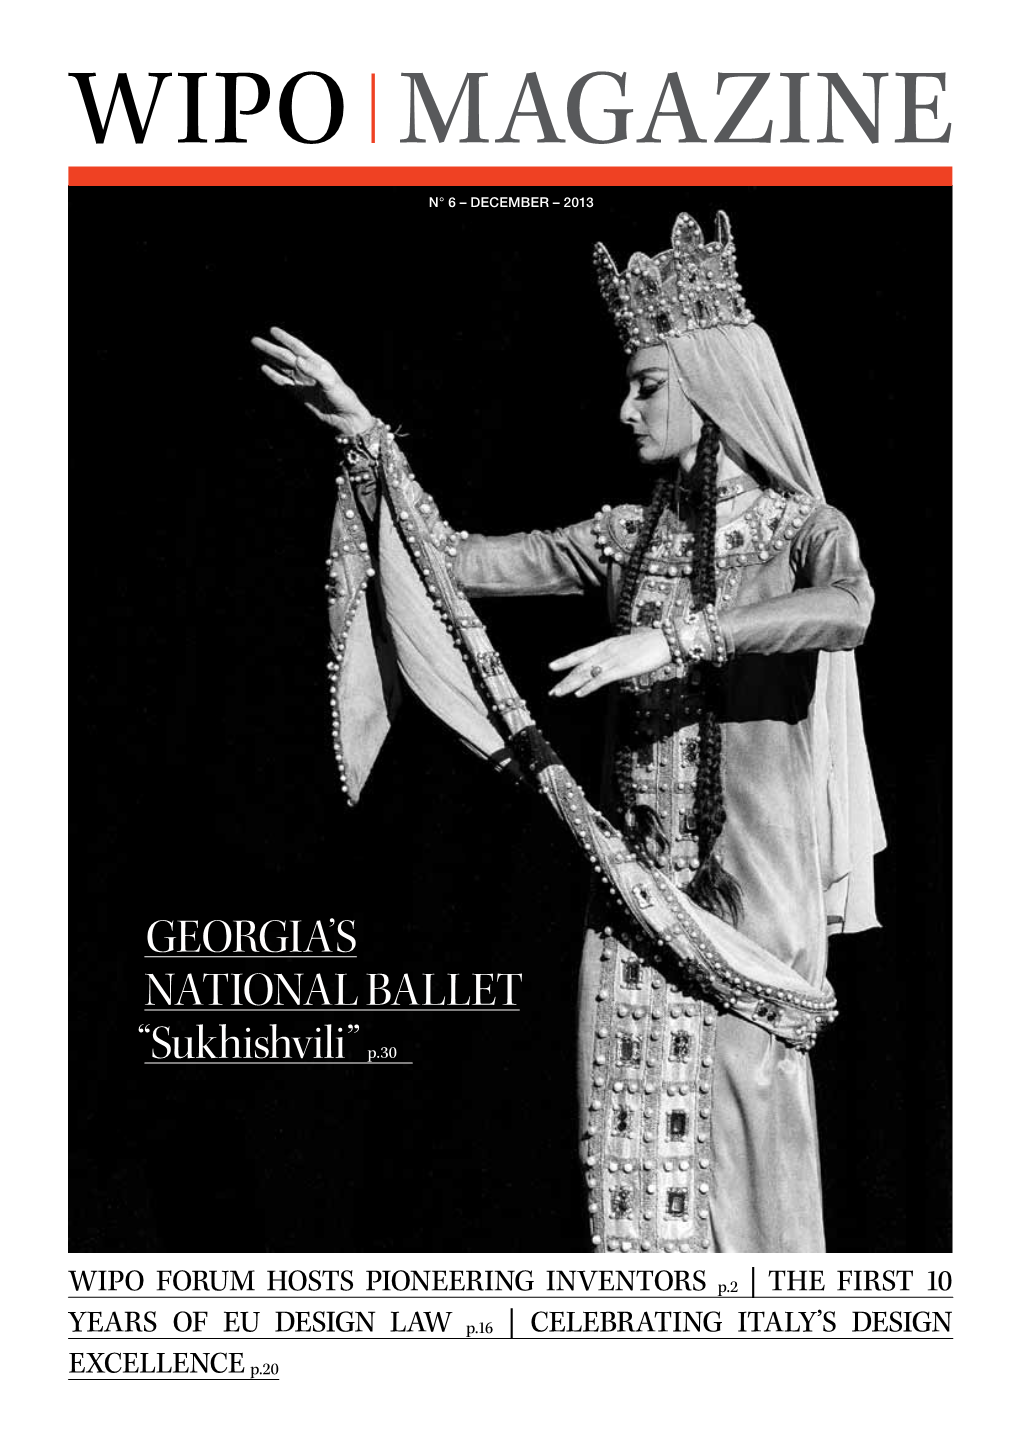 Georgia's National Ballet “Sukhishvili”